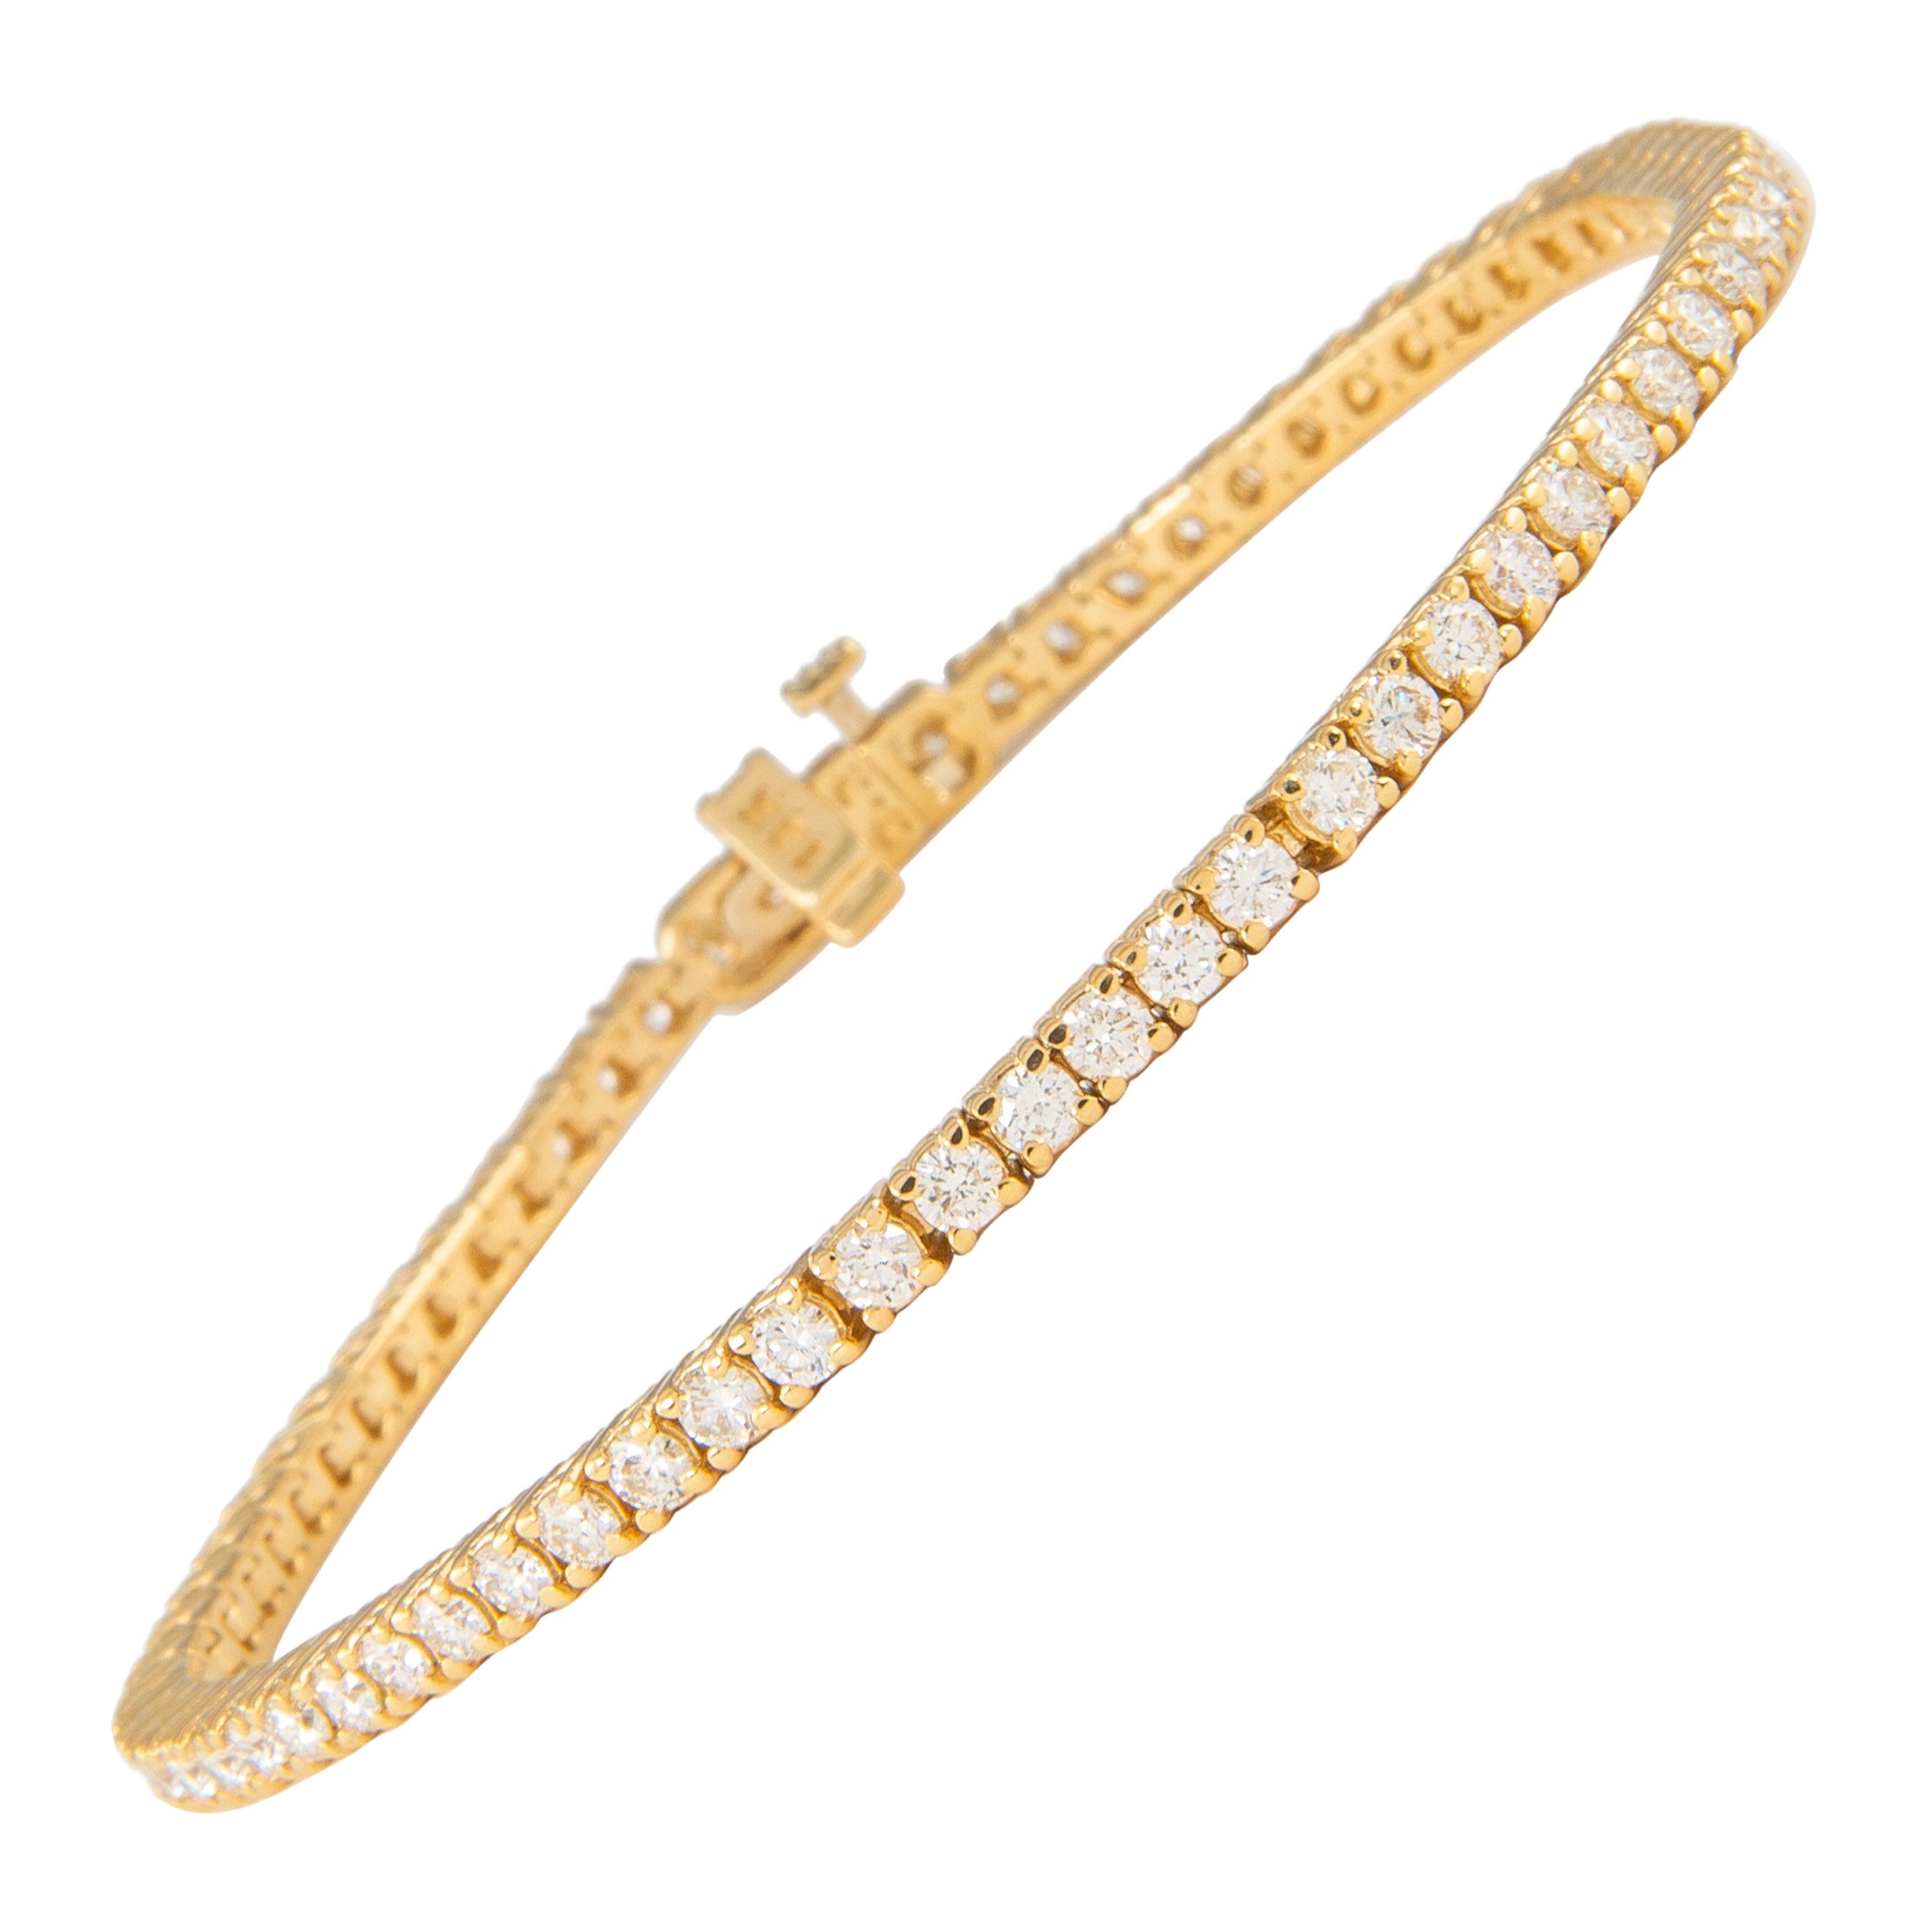 Alexander 3.10 Carats Diamond Tennis Bracelet 18 Karat Yellow Gold